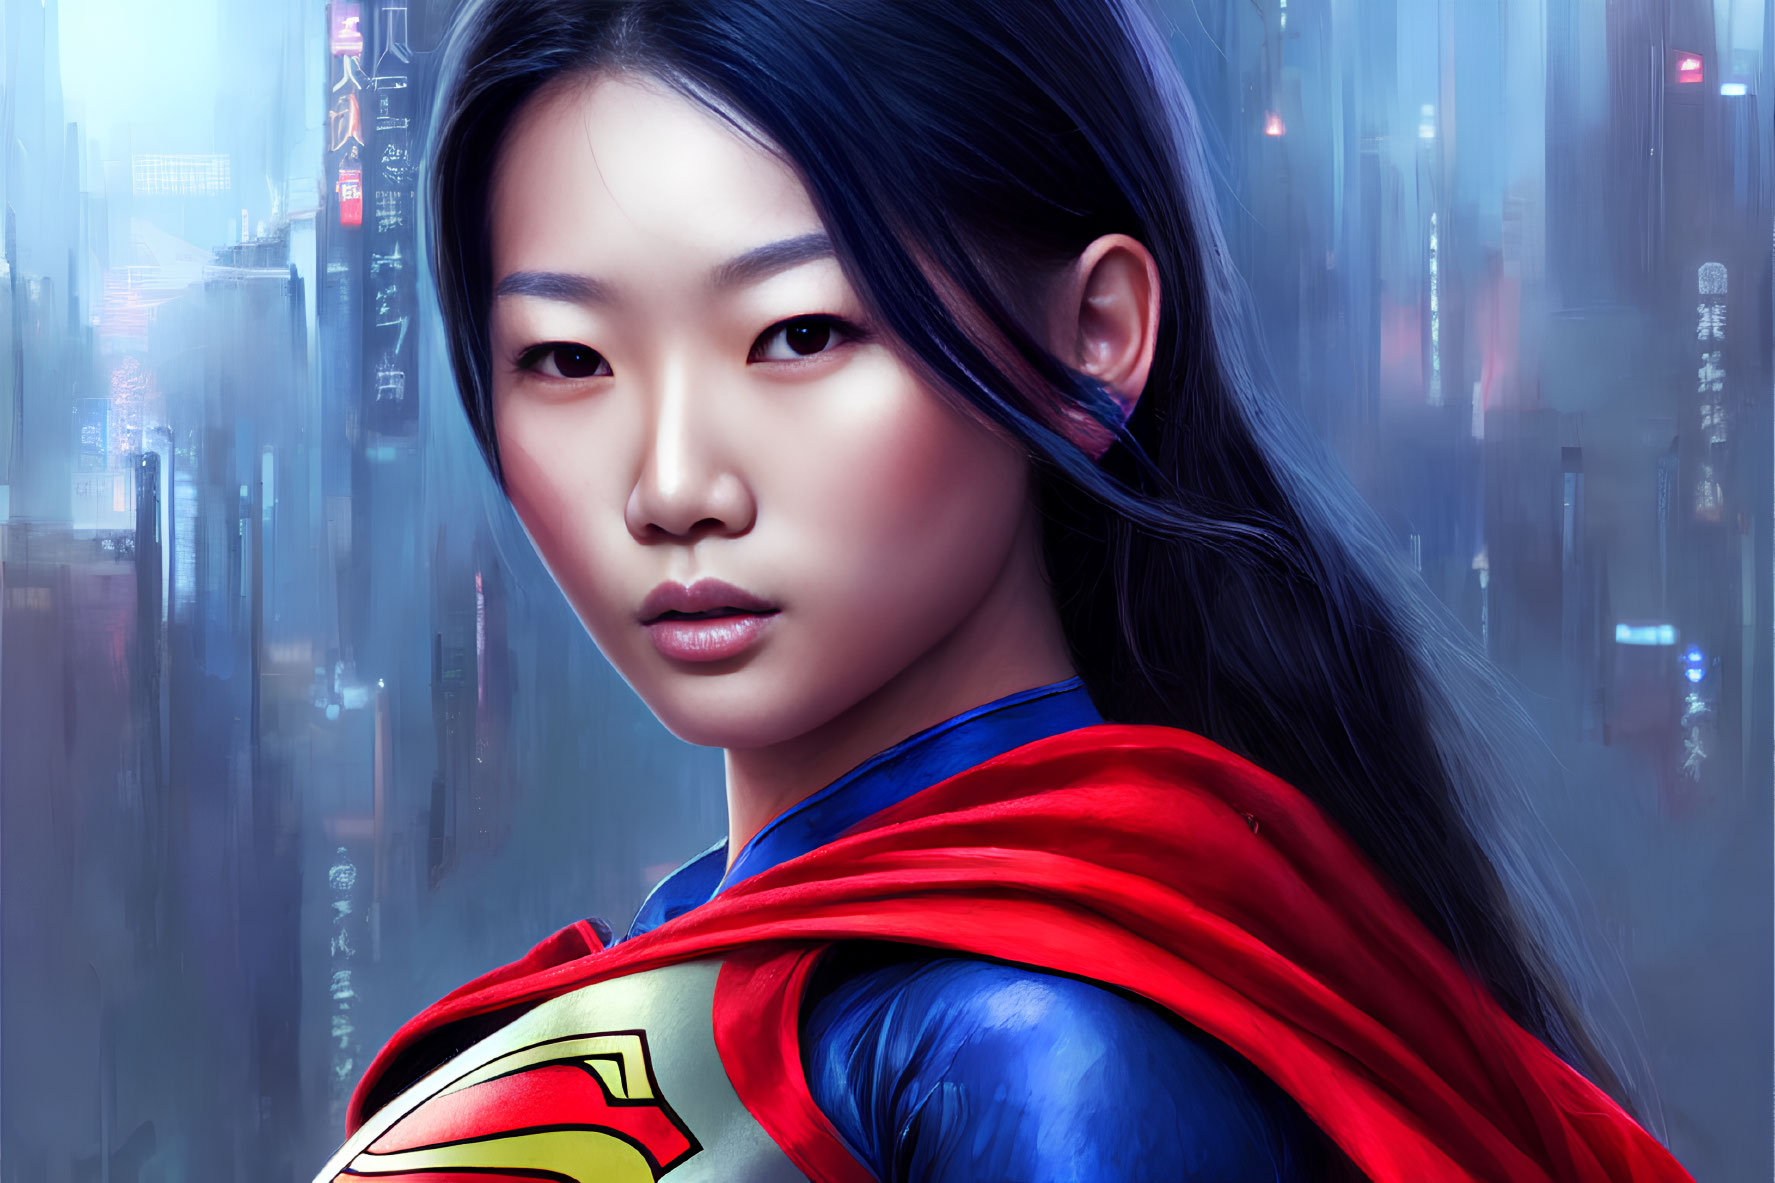 Digital artwork: Asian woman as Supergirl in futuristic cityscape